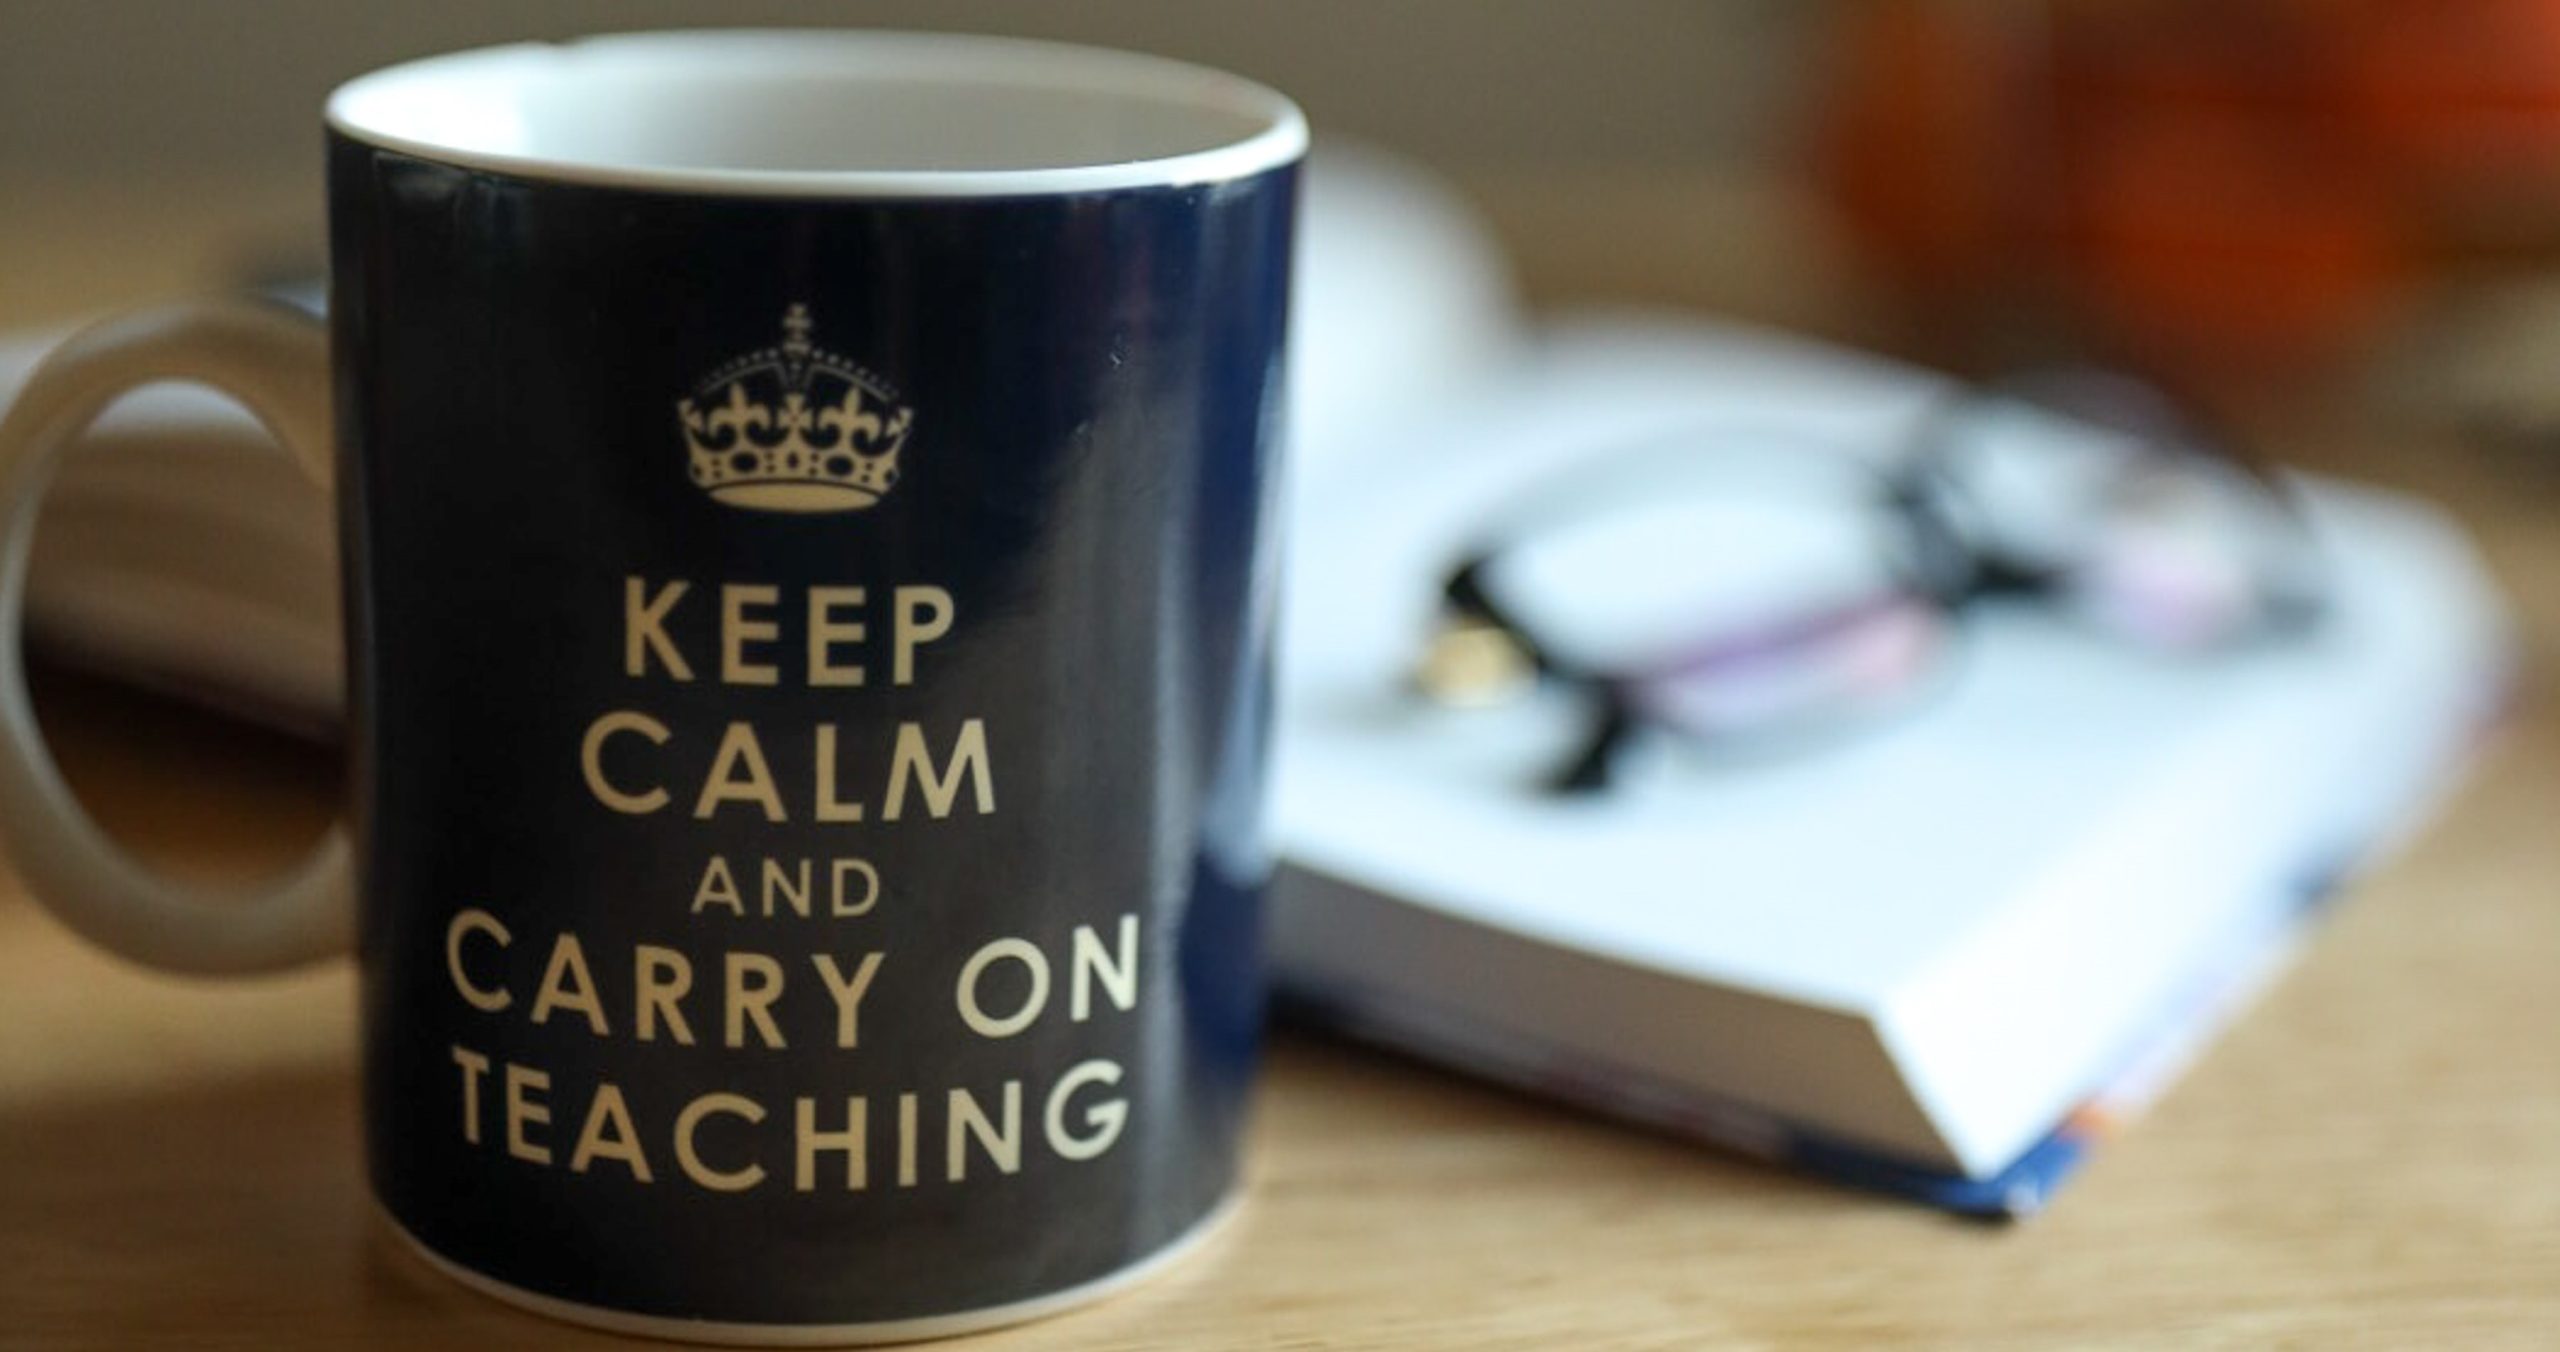 Keep calm and carry on teaching motto on a mug